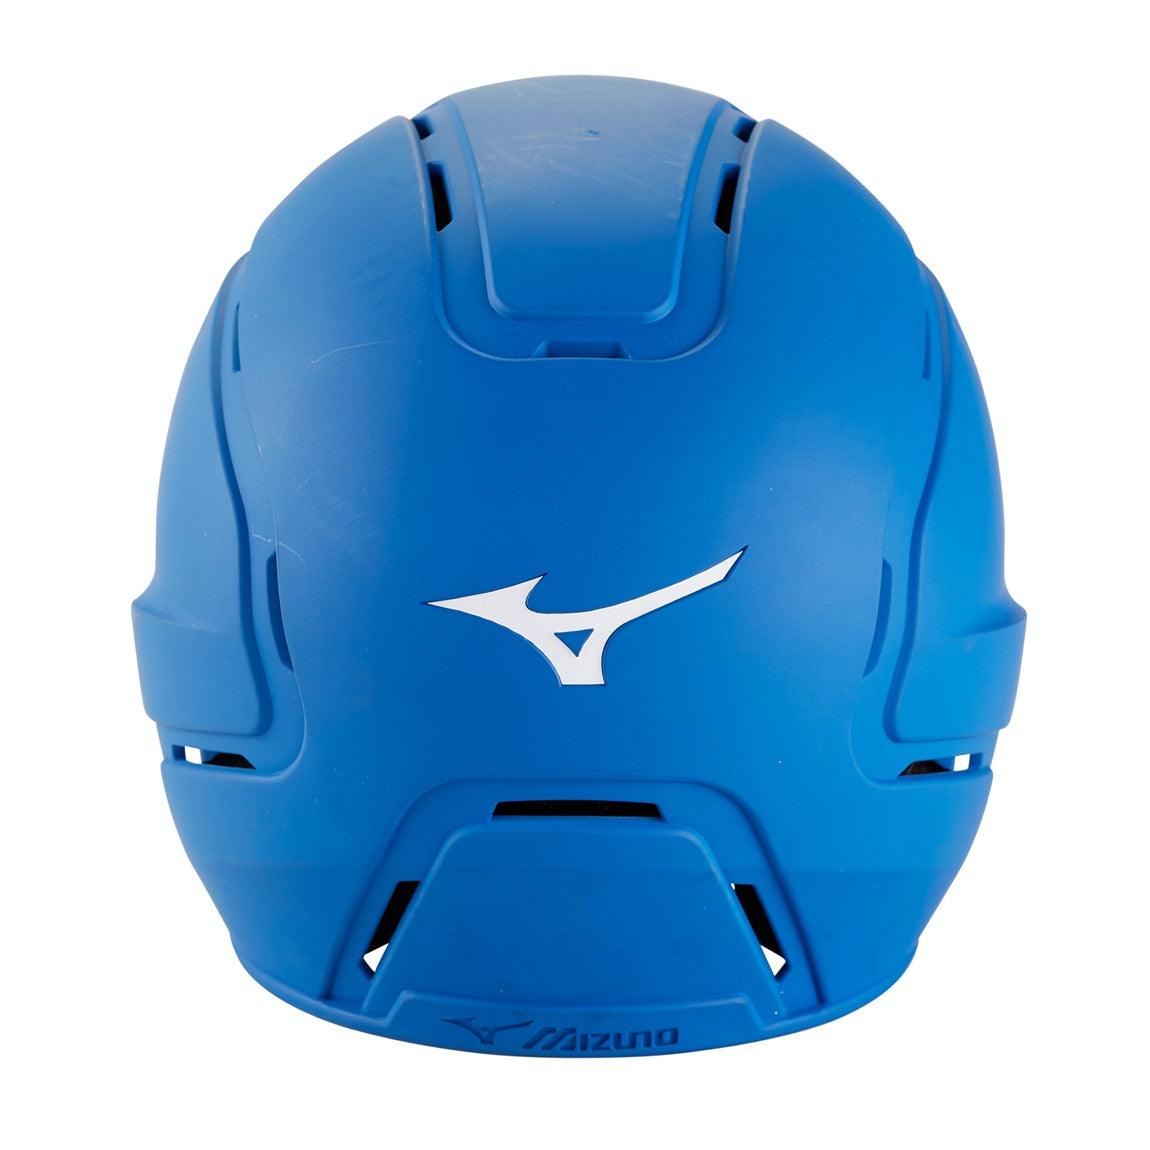 Mizuno B6 Fitted Baseball Batting Helmet - Solid Color